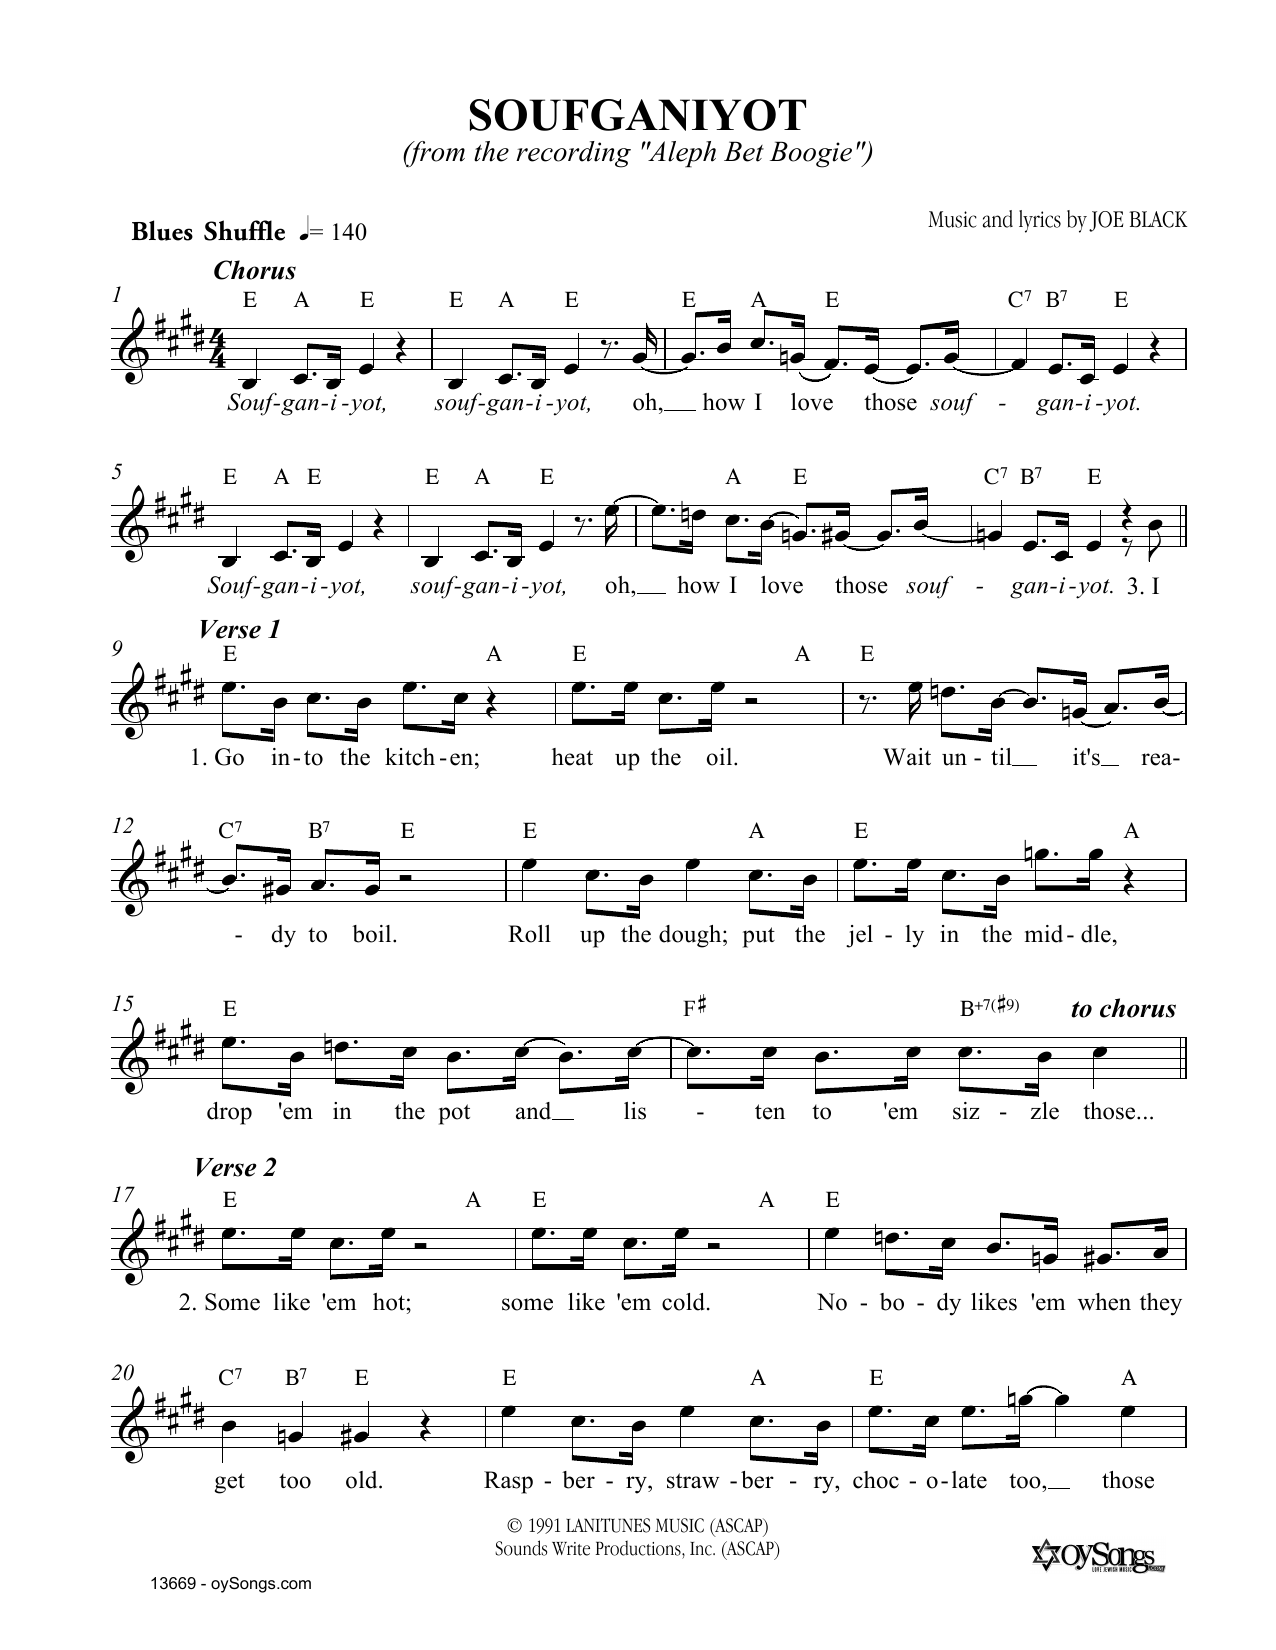 Joe Black Soufganiyot sheet music notes and chords arranged for Lead Sheet / Fake Book